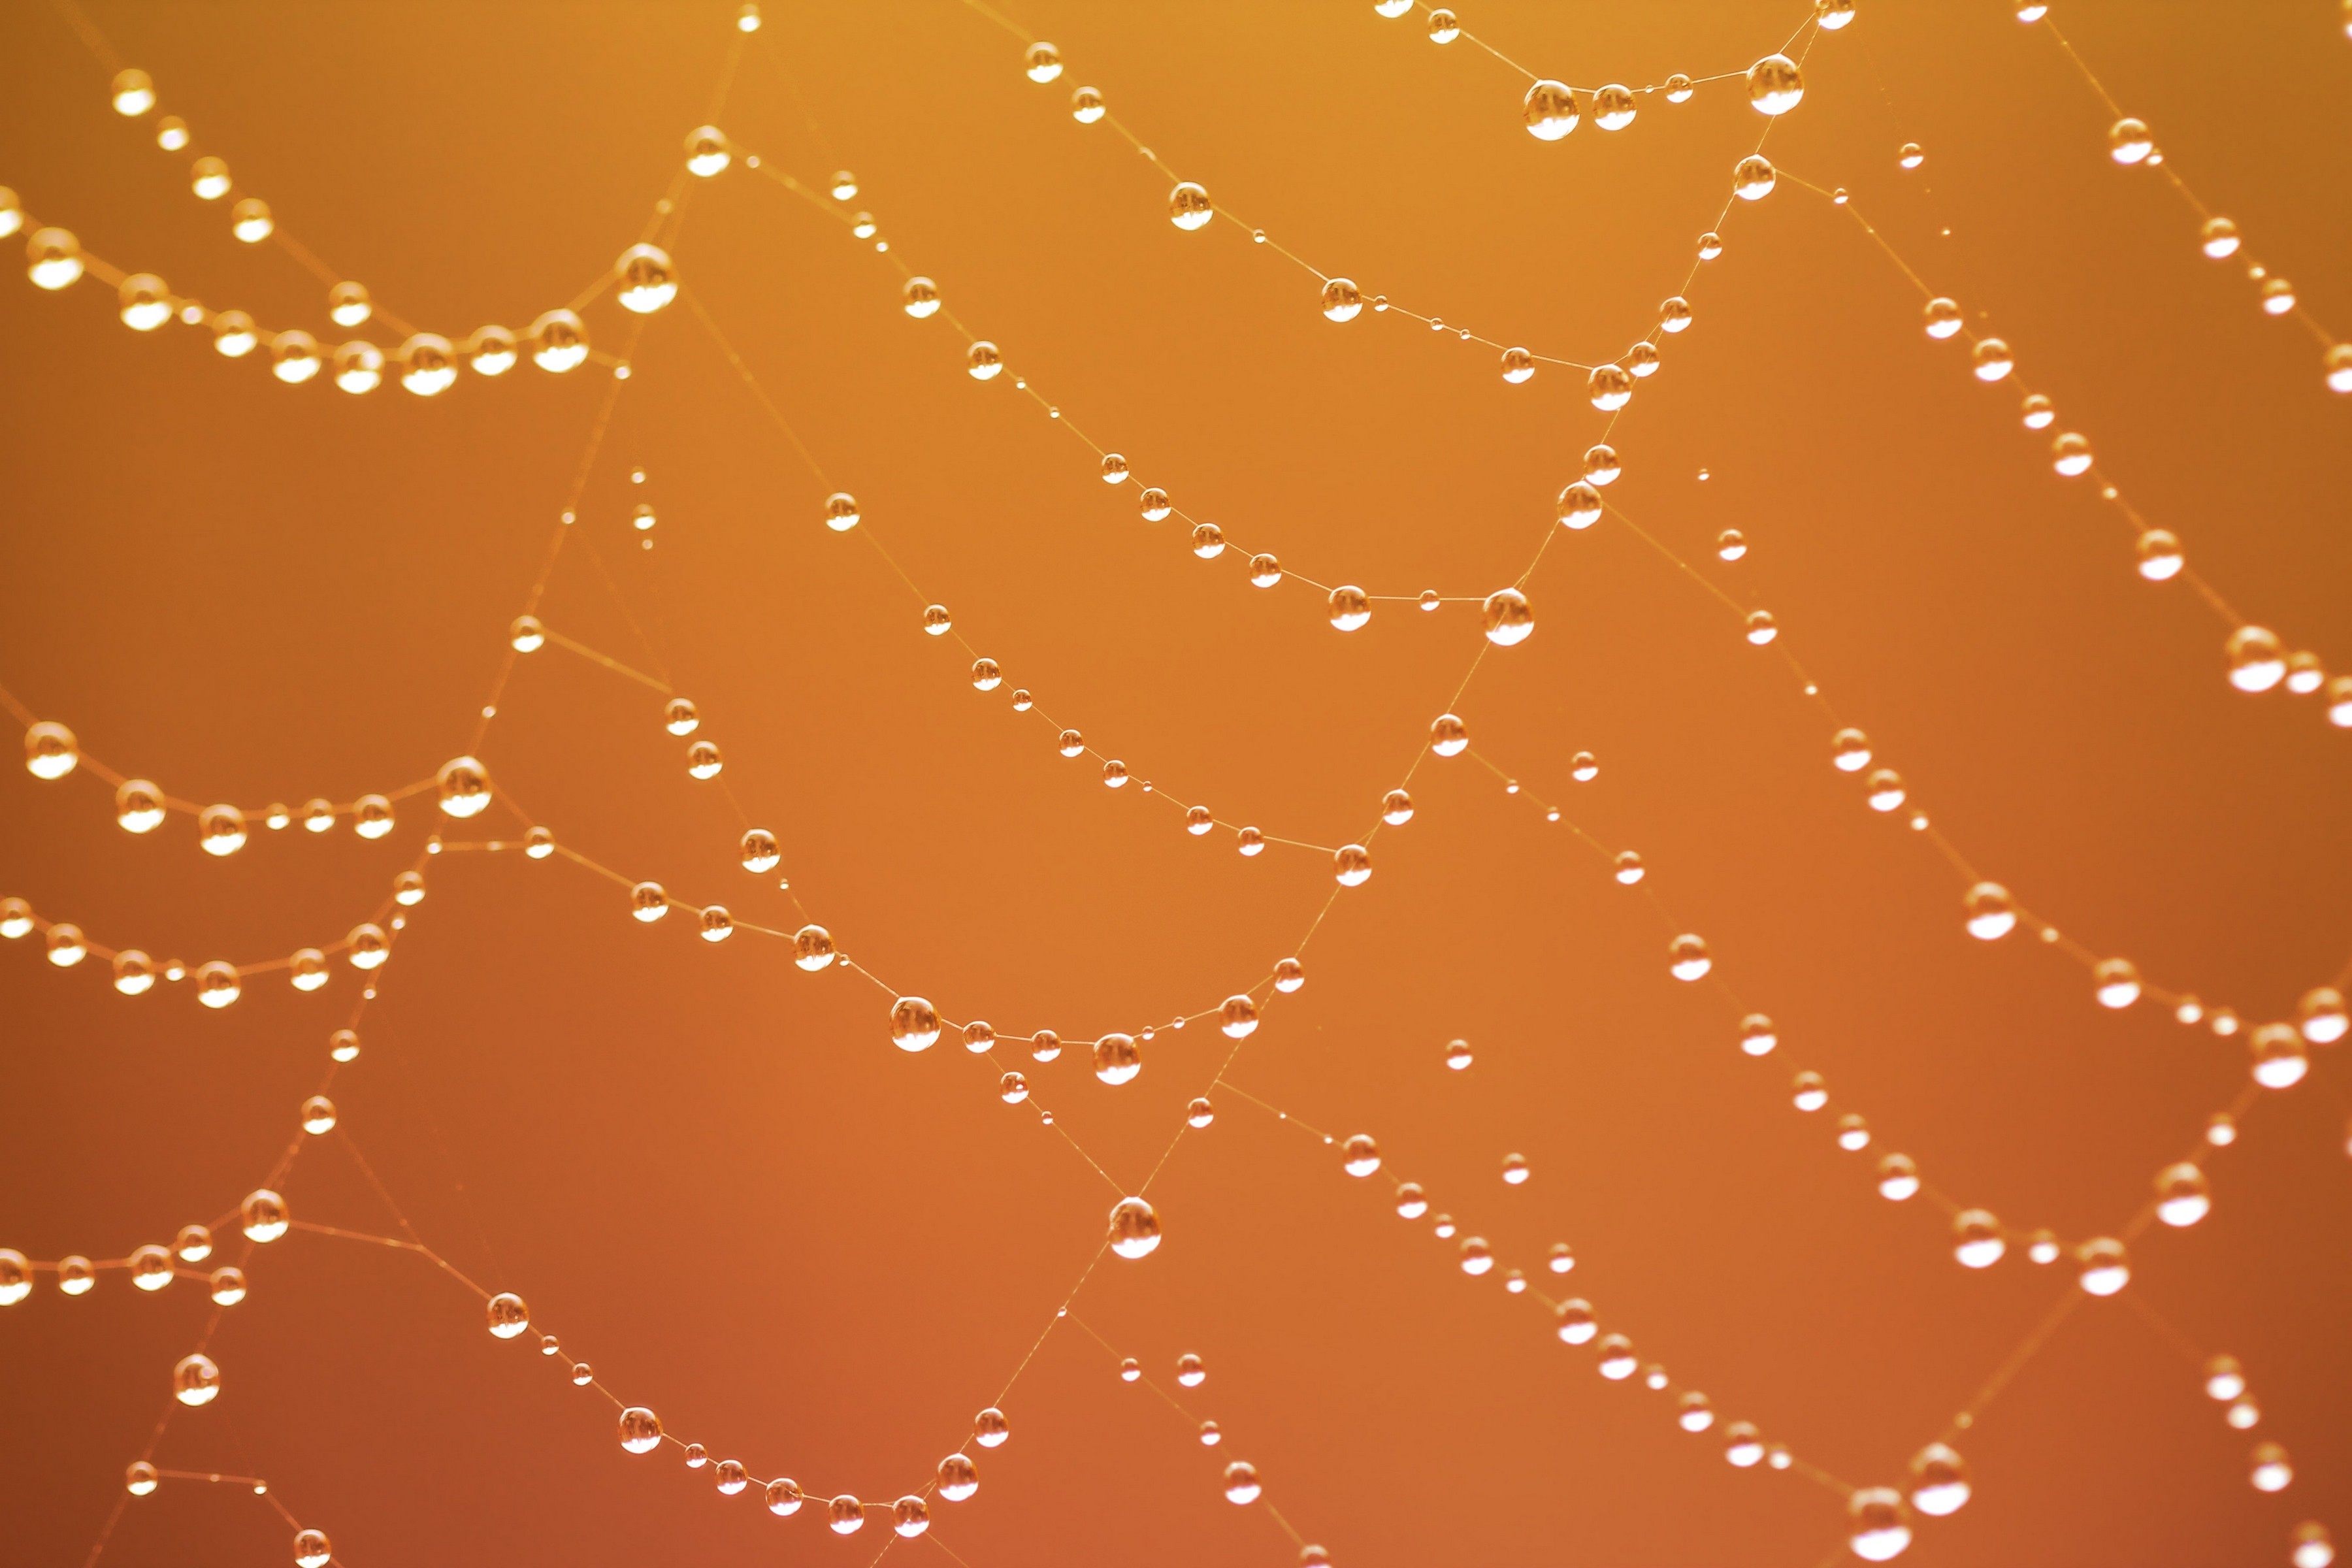 General 3600x2400 macro nets water drops orange spiderwebs nature orange background